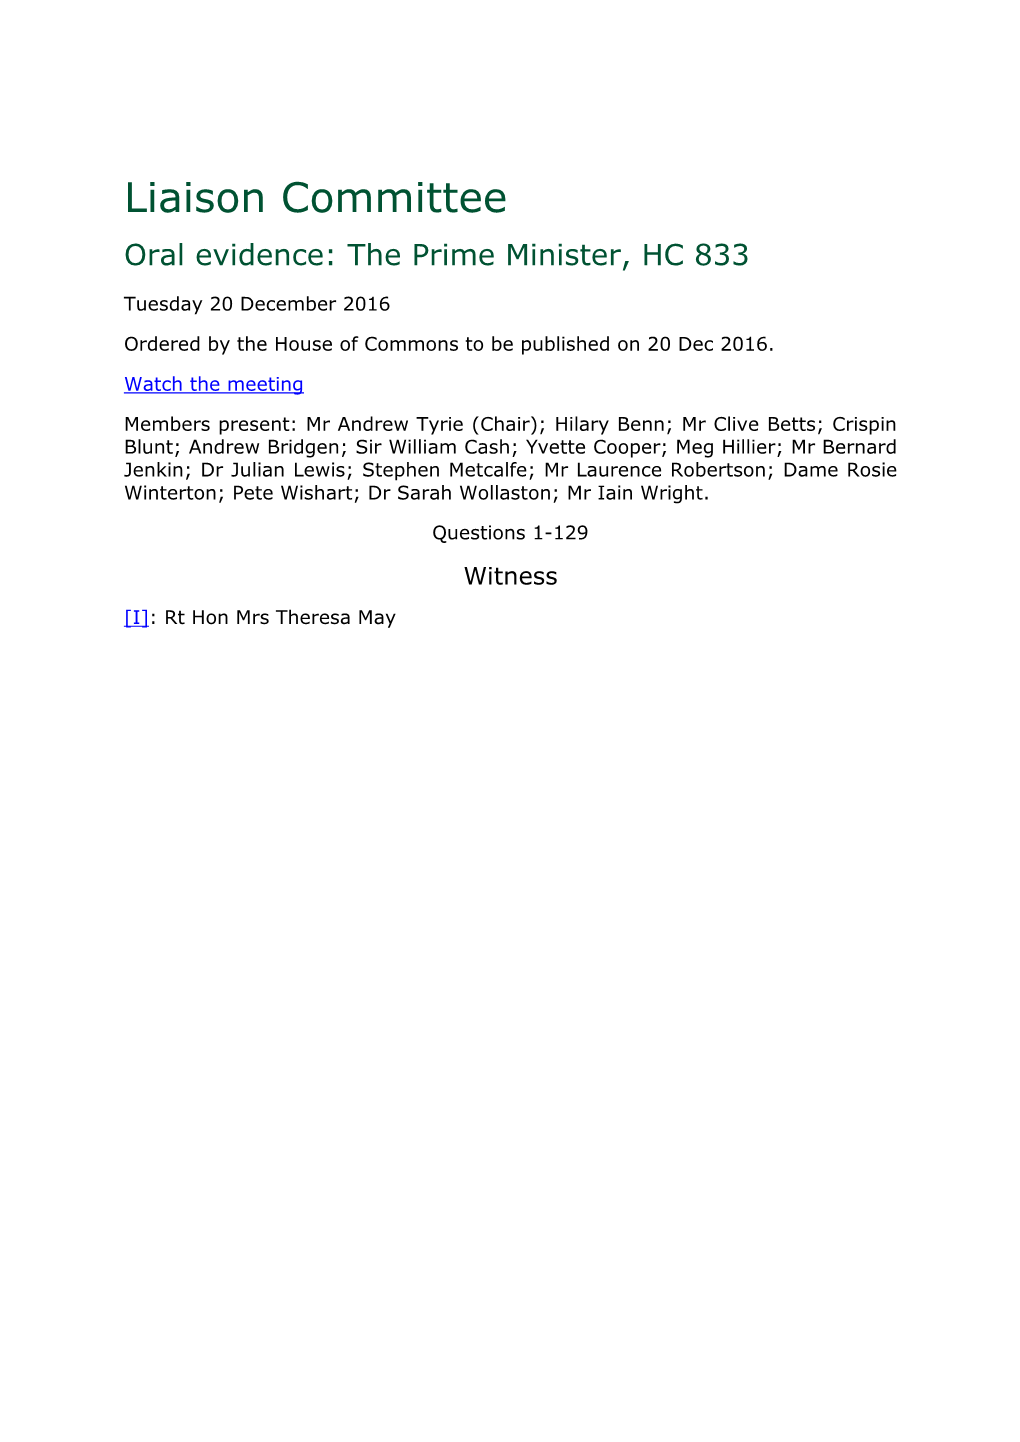 The Prime Minister, HC 833